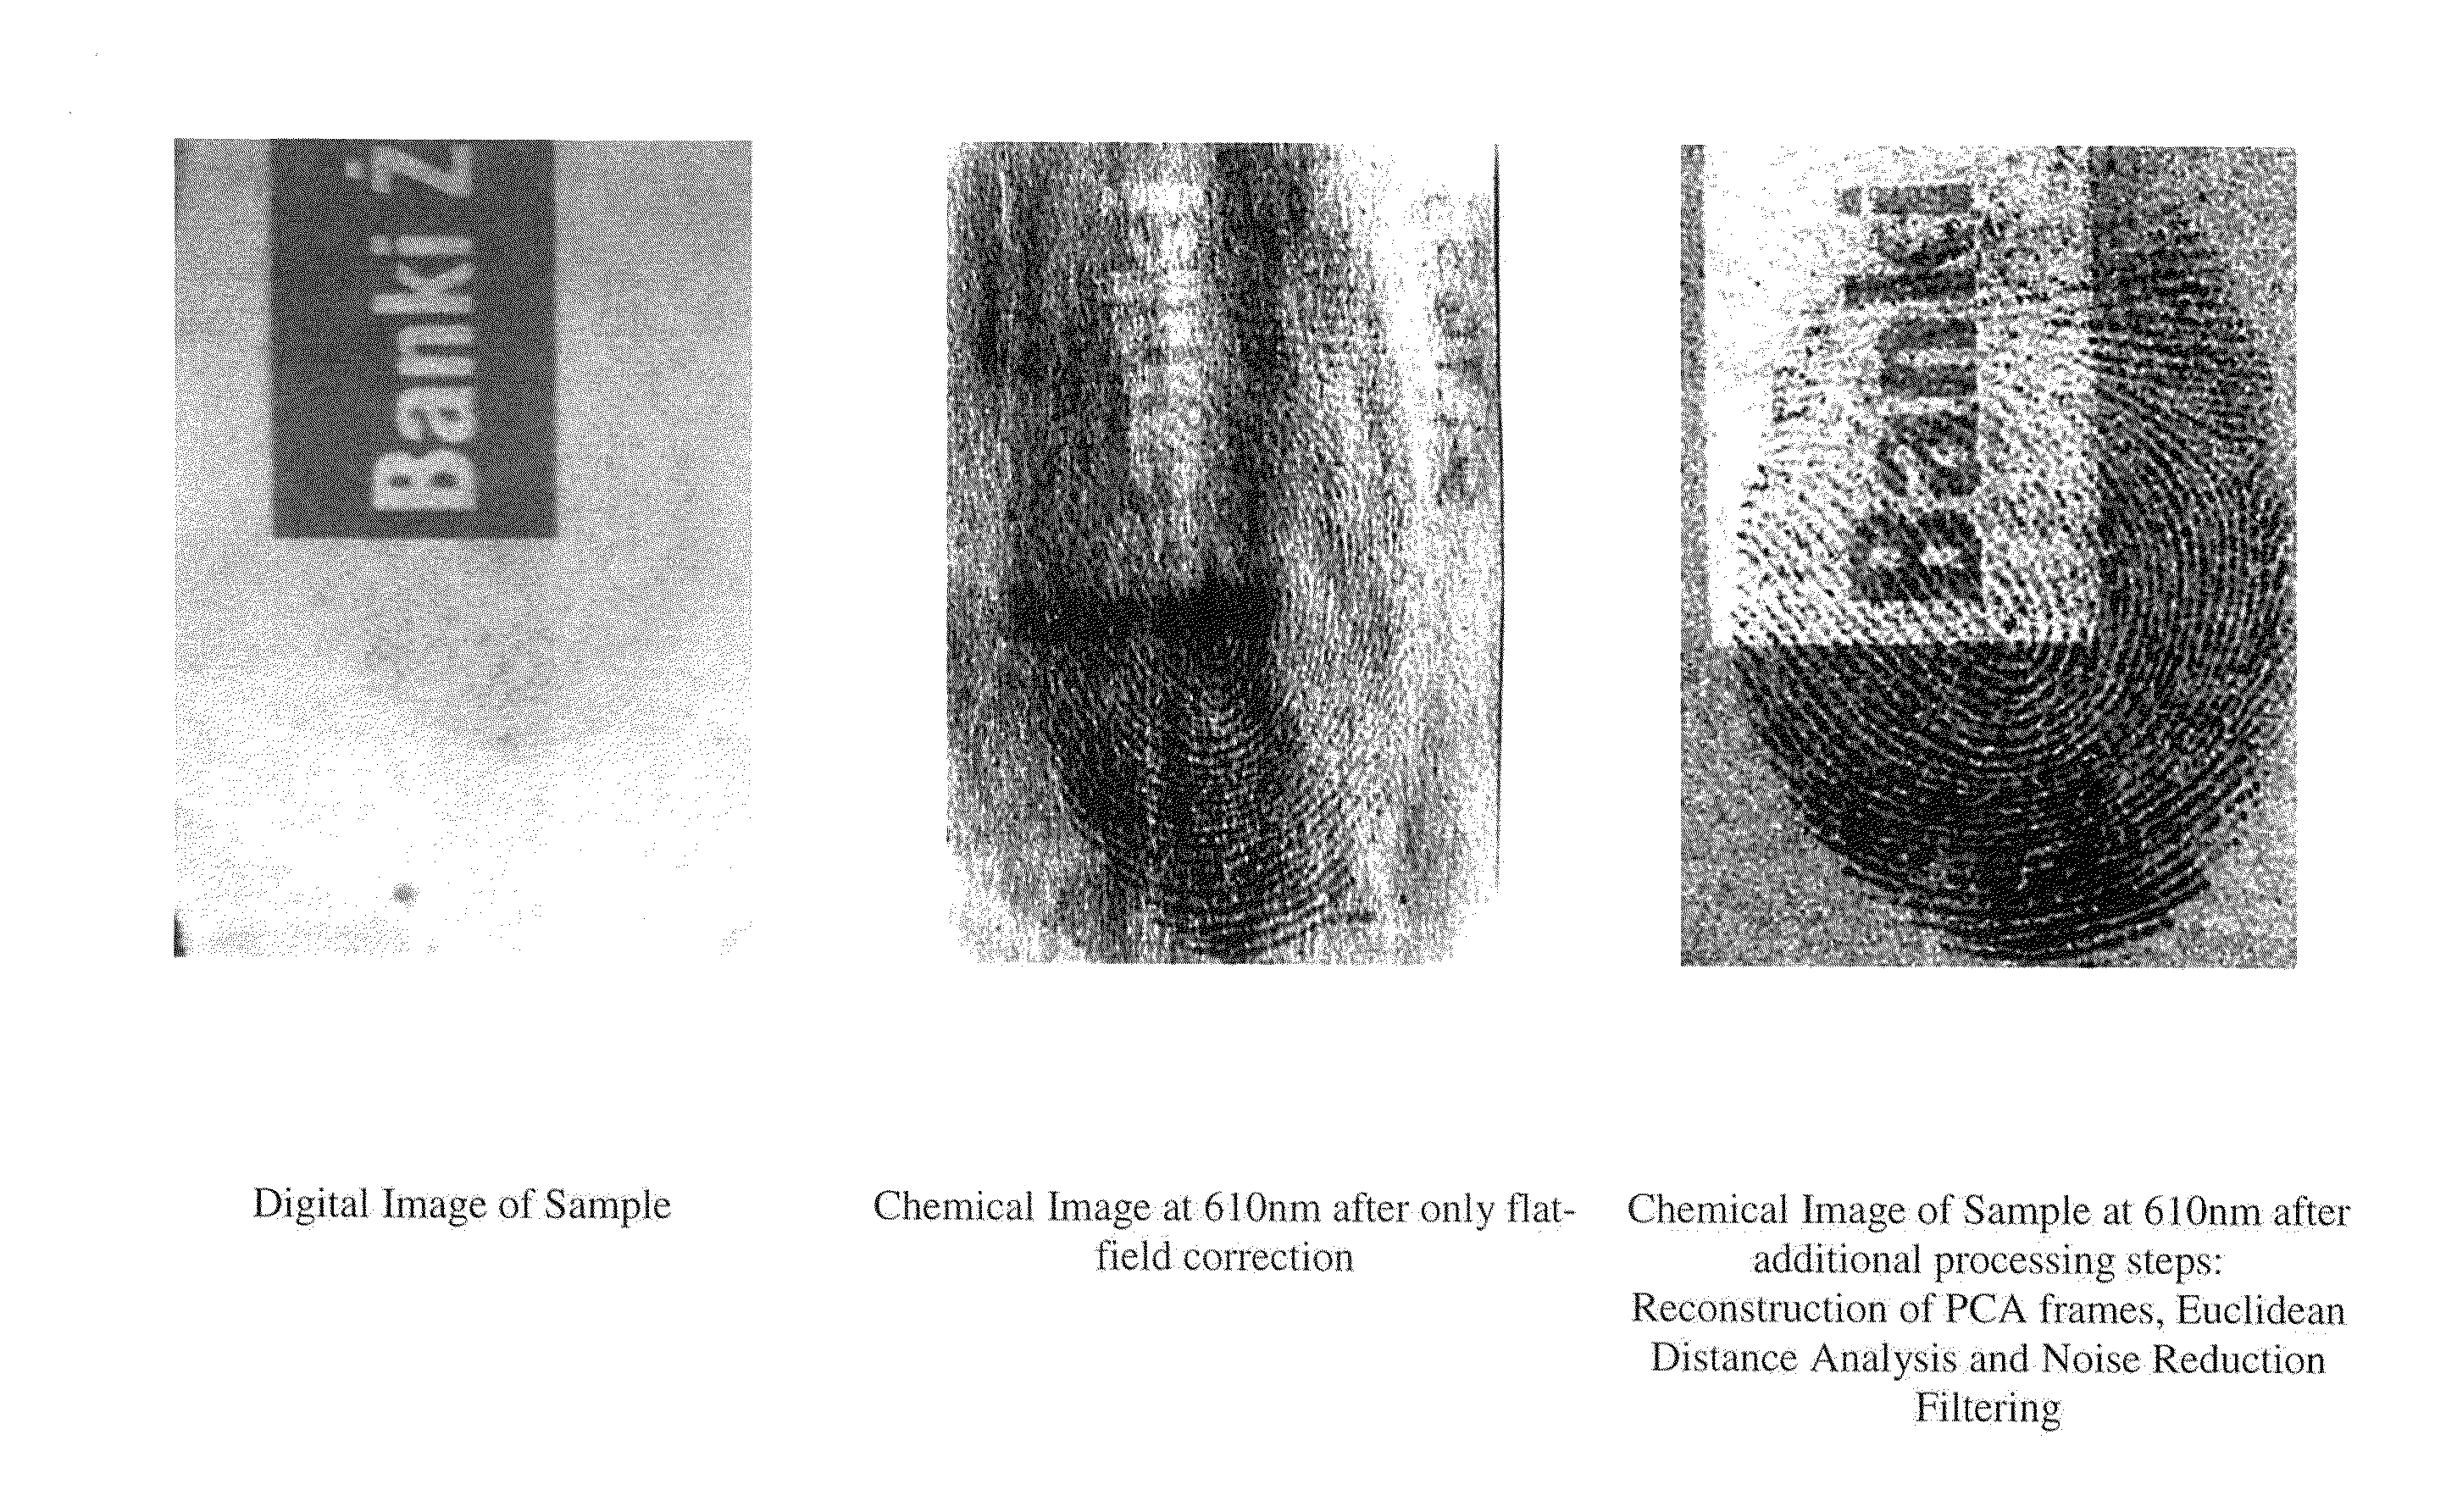 System and Method for Hyperspectral Imaging of Treated Fingerprints